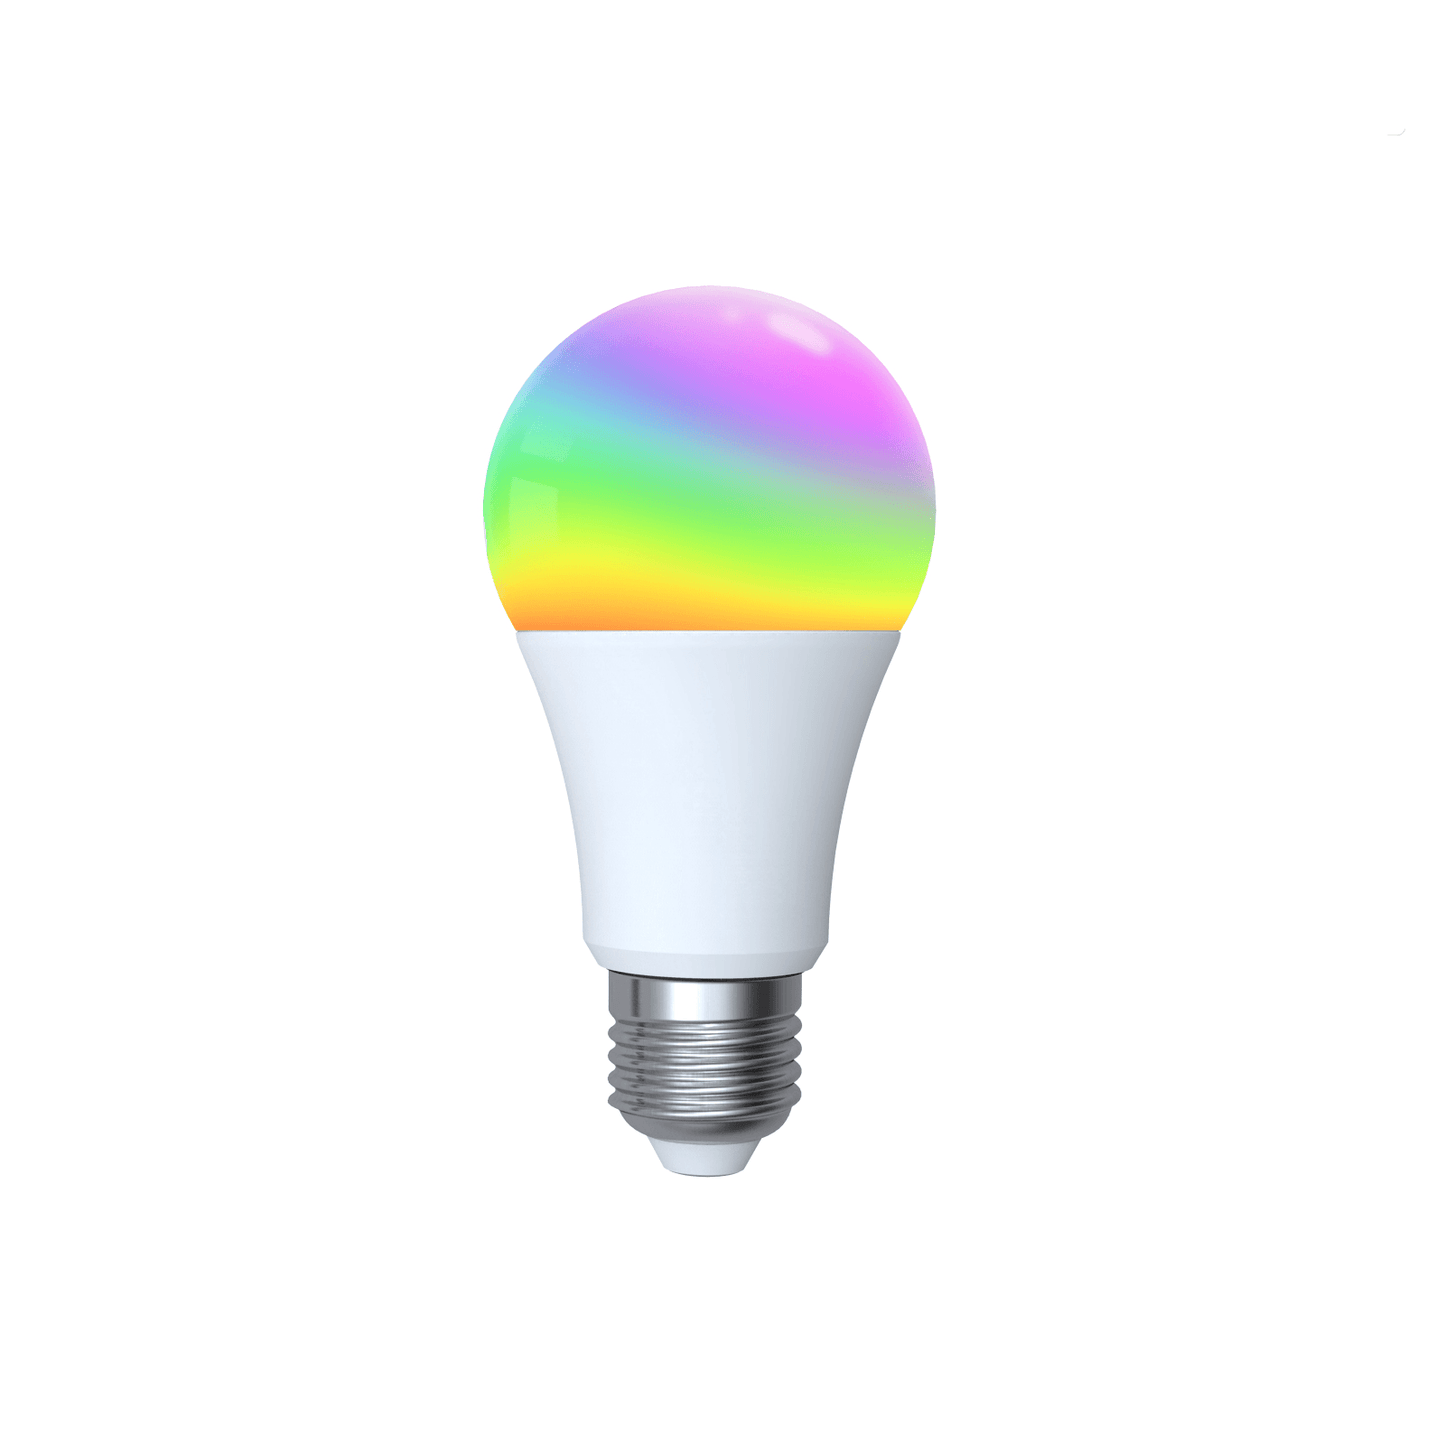 Inzet paperback krijgen WiFi Smart LED Light Bulb Dimmable Lamp 14W RGB E27 Color Changeable – MOES